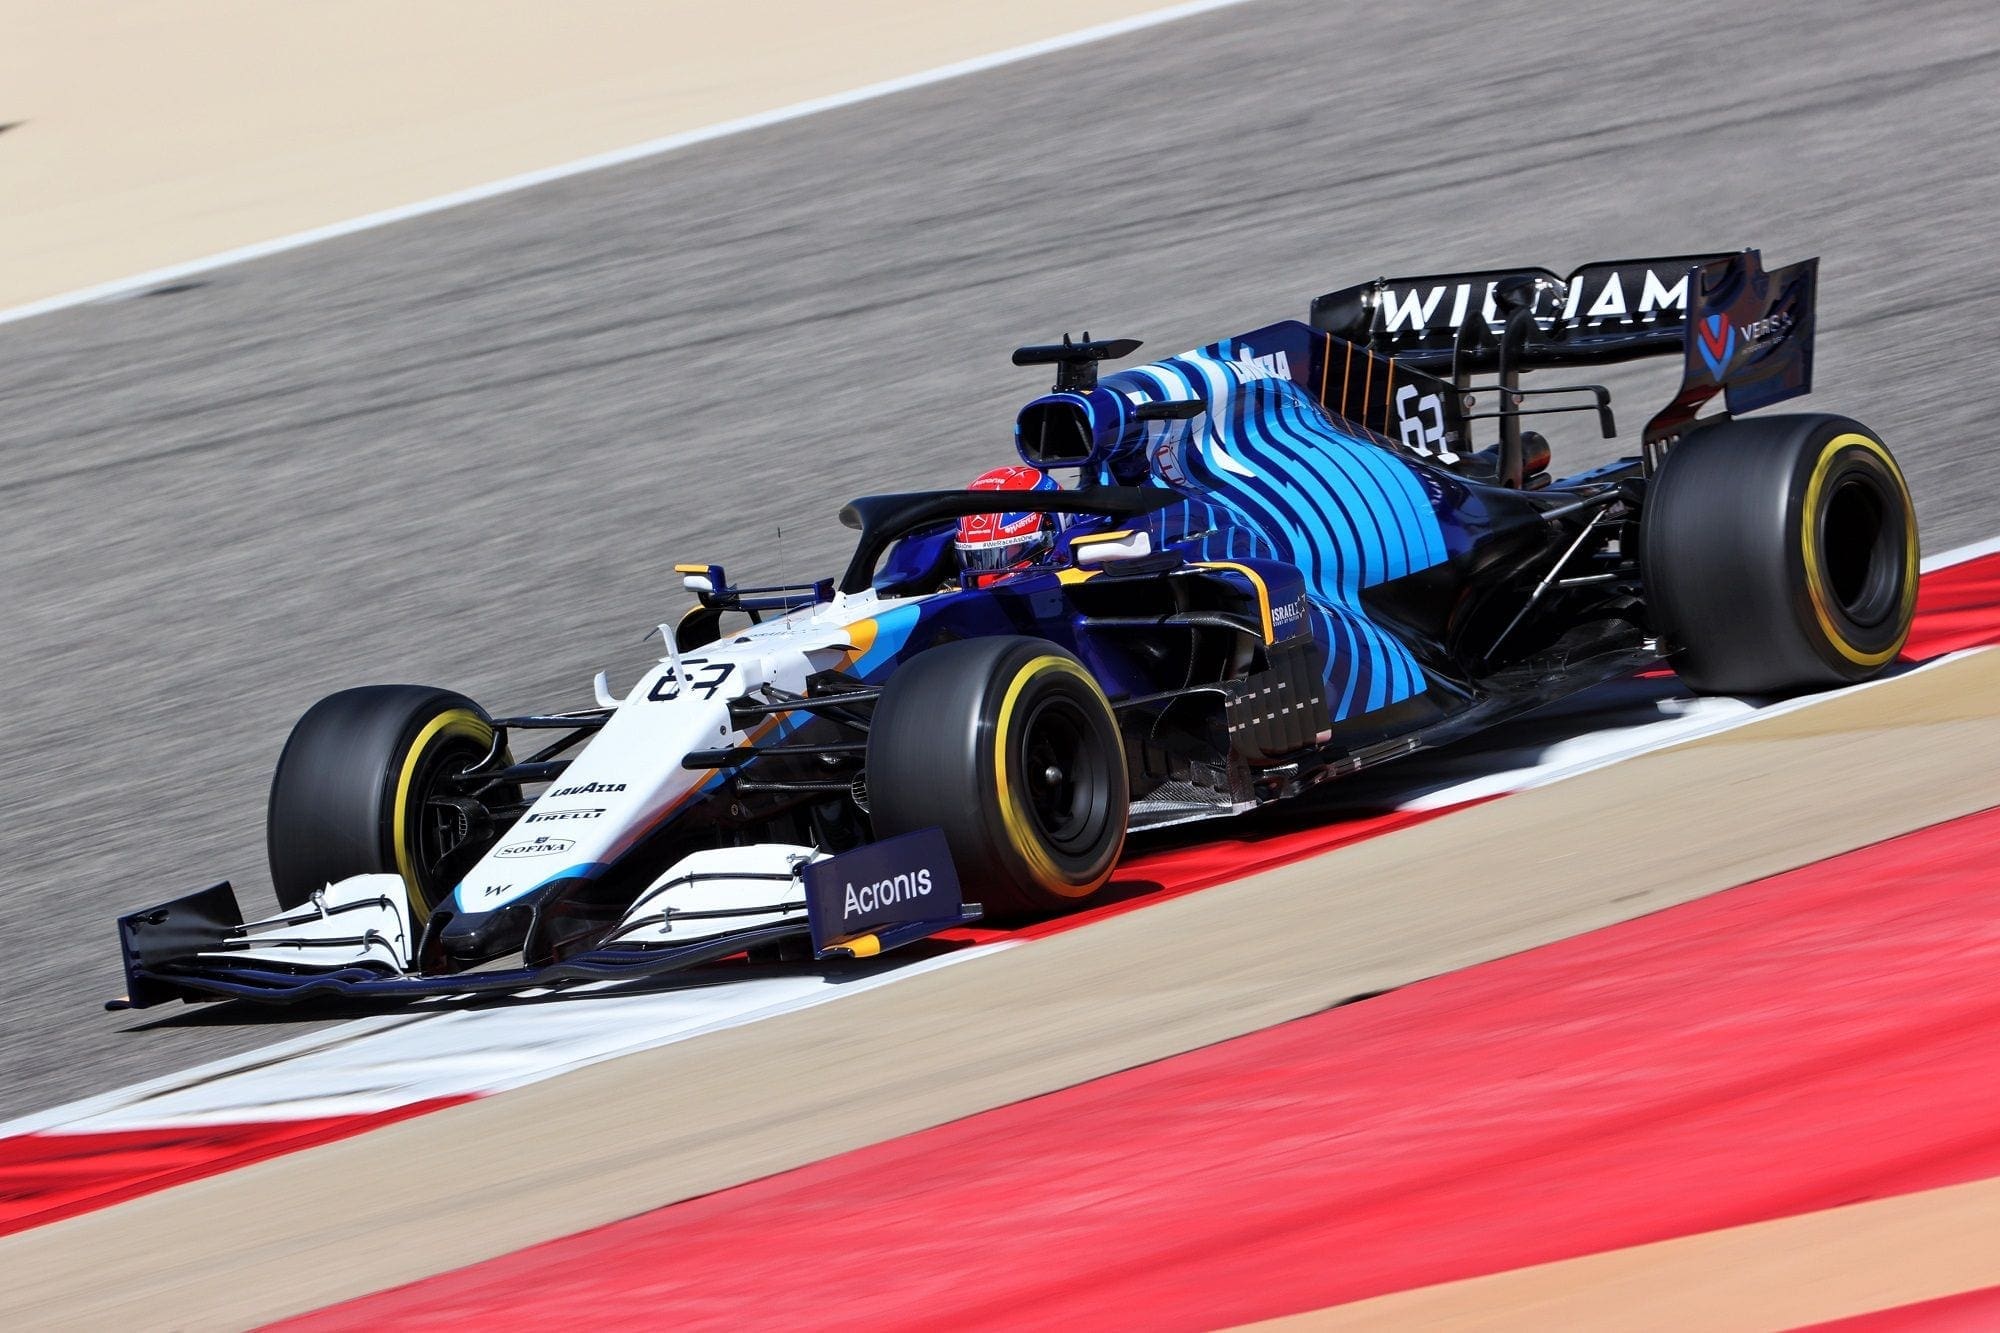 Williams Racing back to glory days?